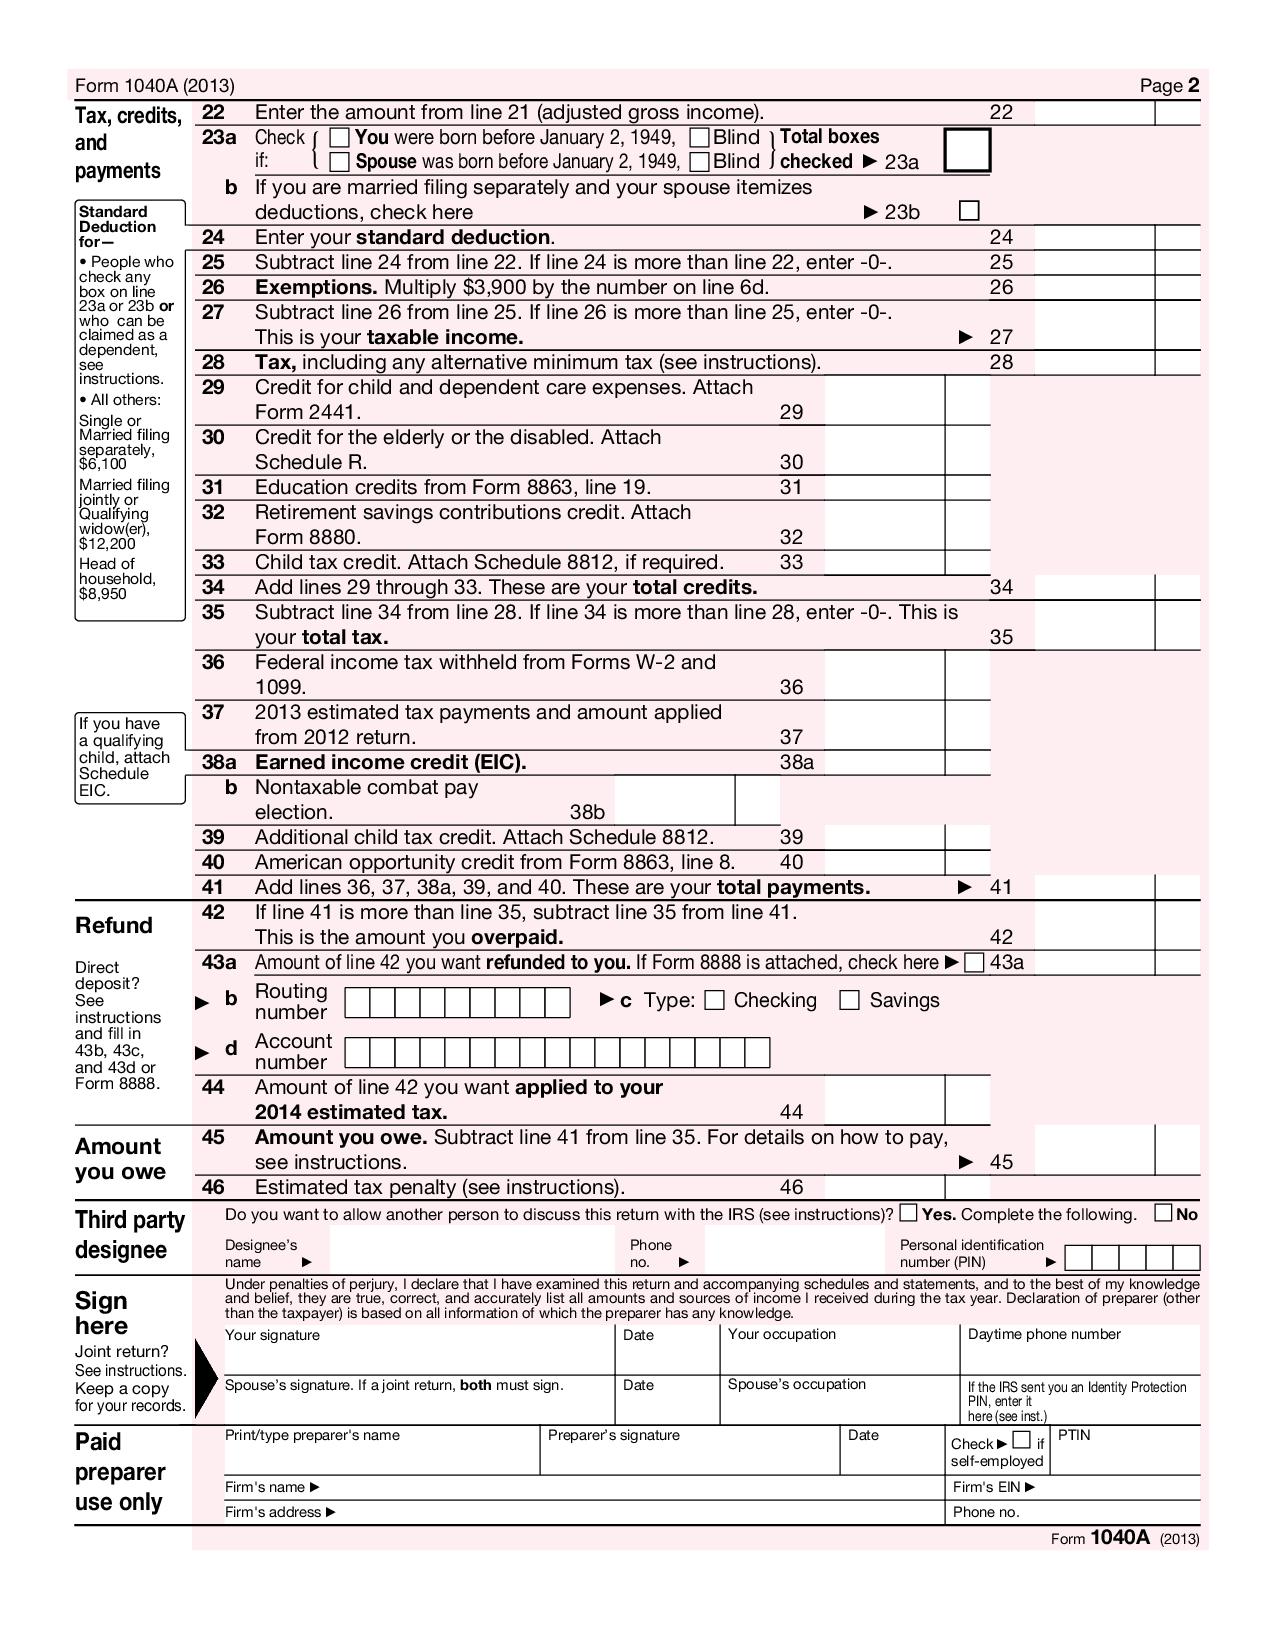 1040A U S Individual Income Tax Return